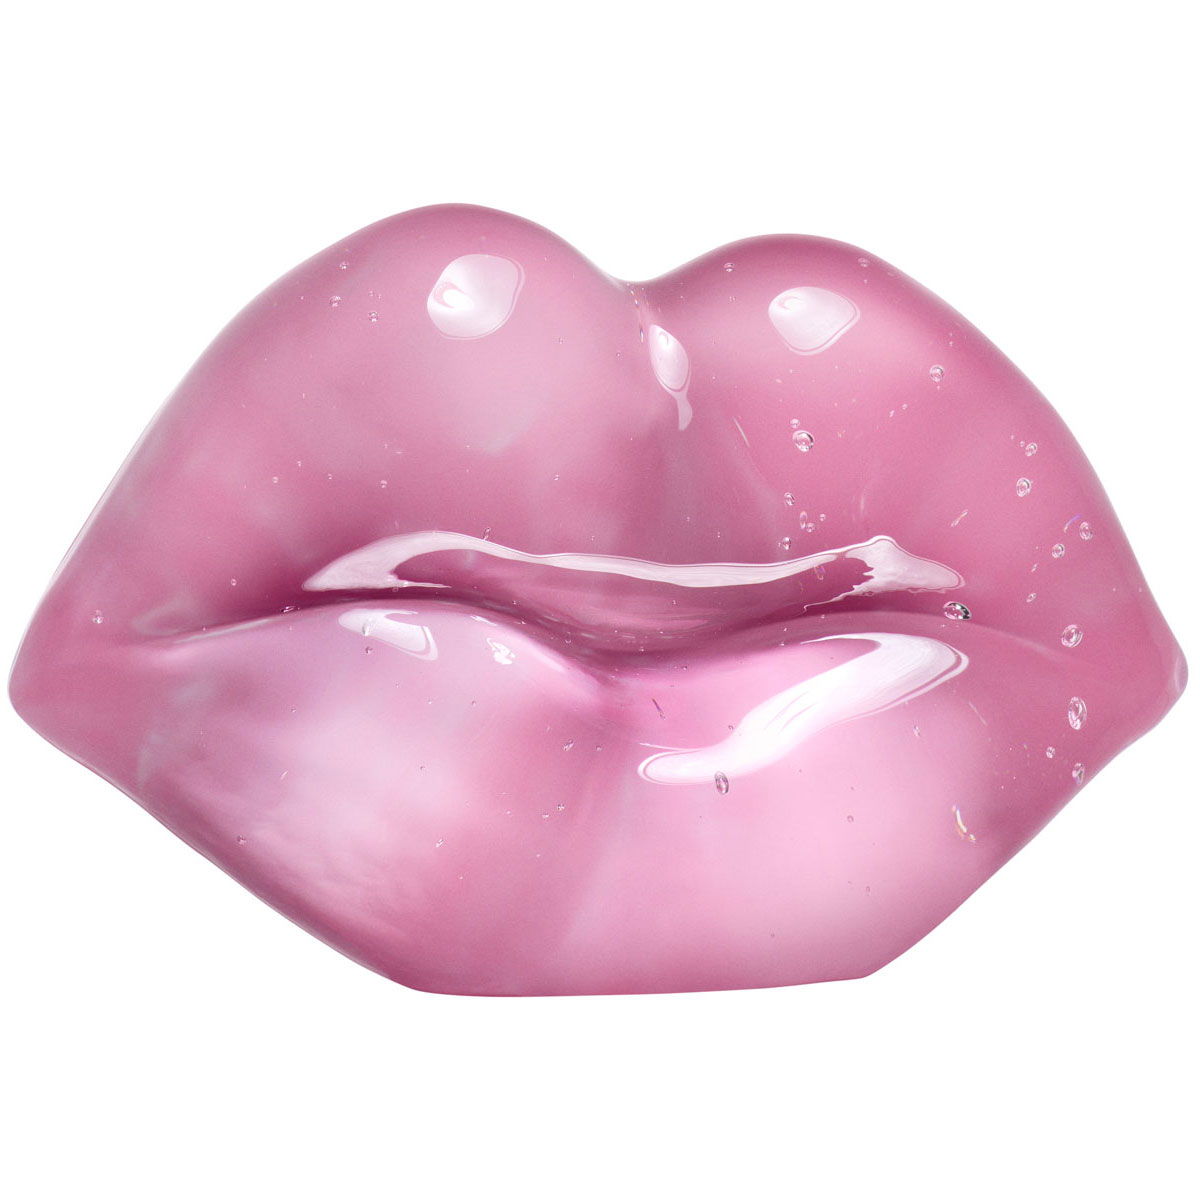 Kosta Boda Make Up Hot Lips, Pearl Pink